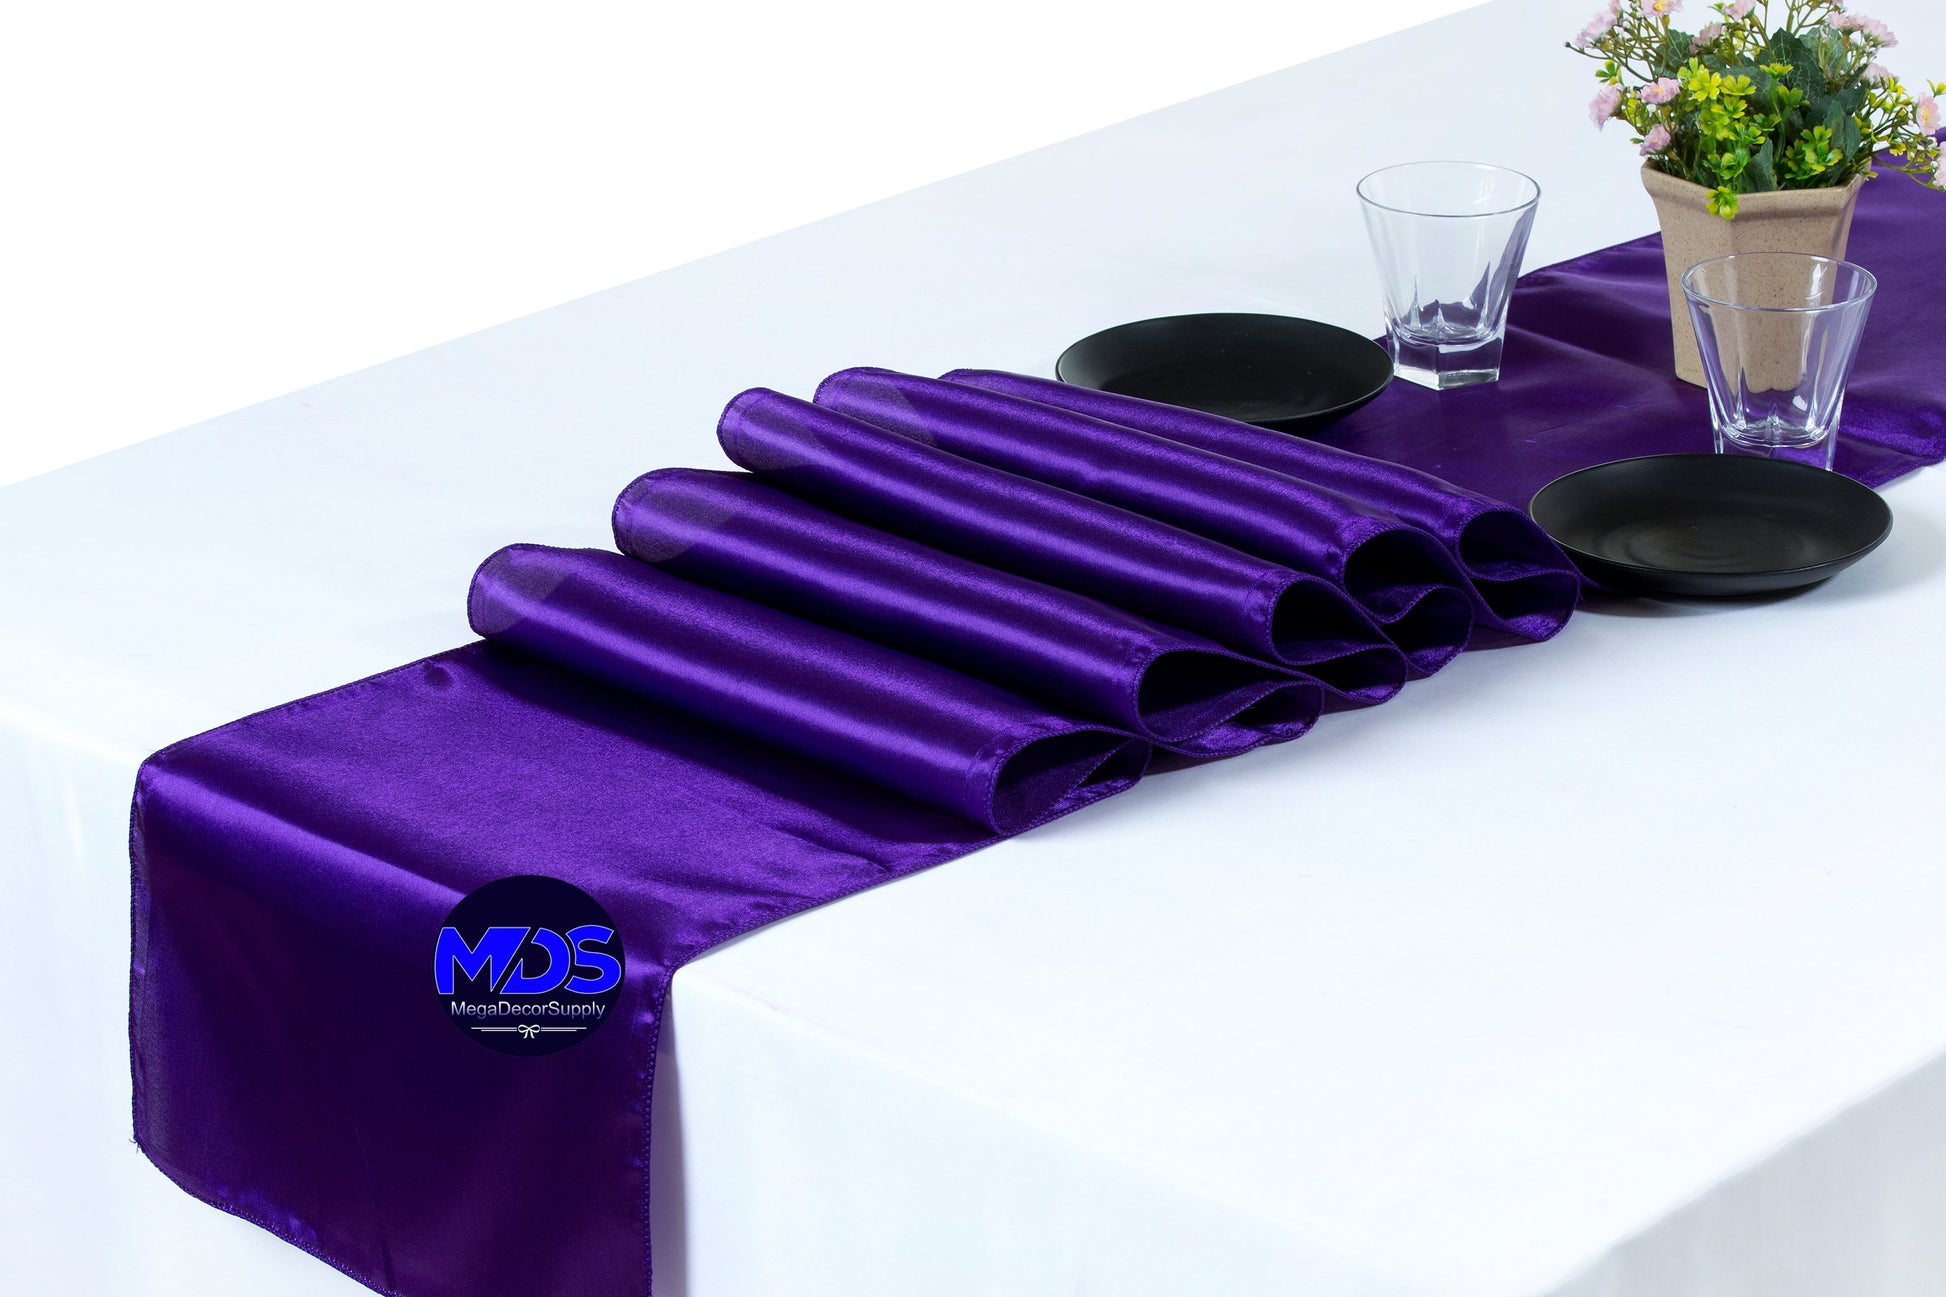 Cadbury Purple,0a6c1e6e-0117-4315-a0e2-f27434771201